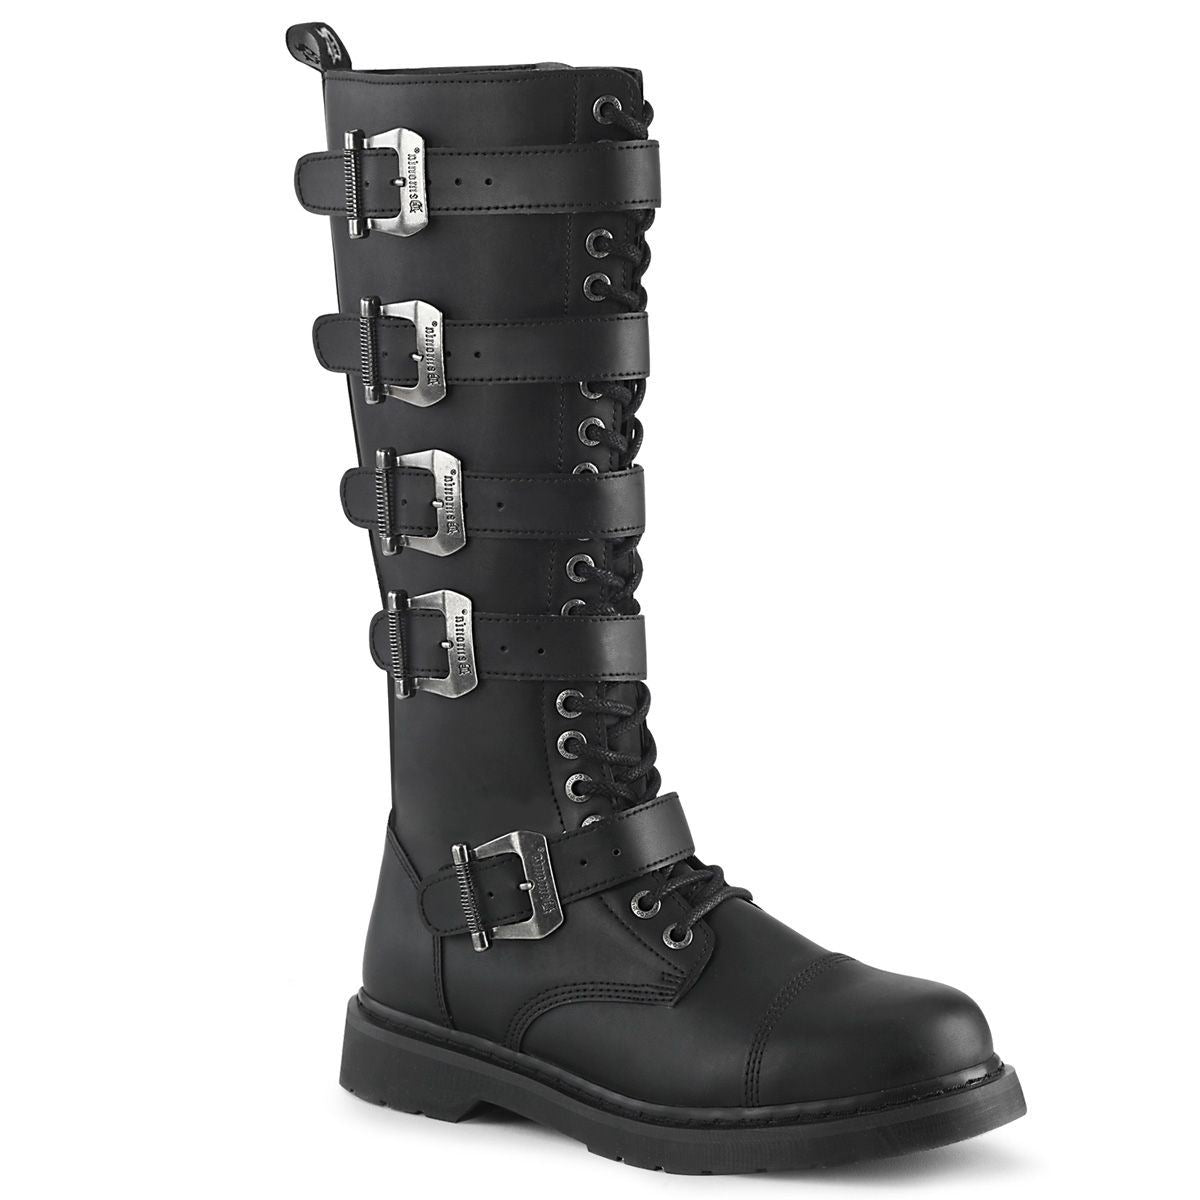 Demonia Bolt 425 Black Vegan Leather Knee High Boots